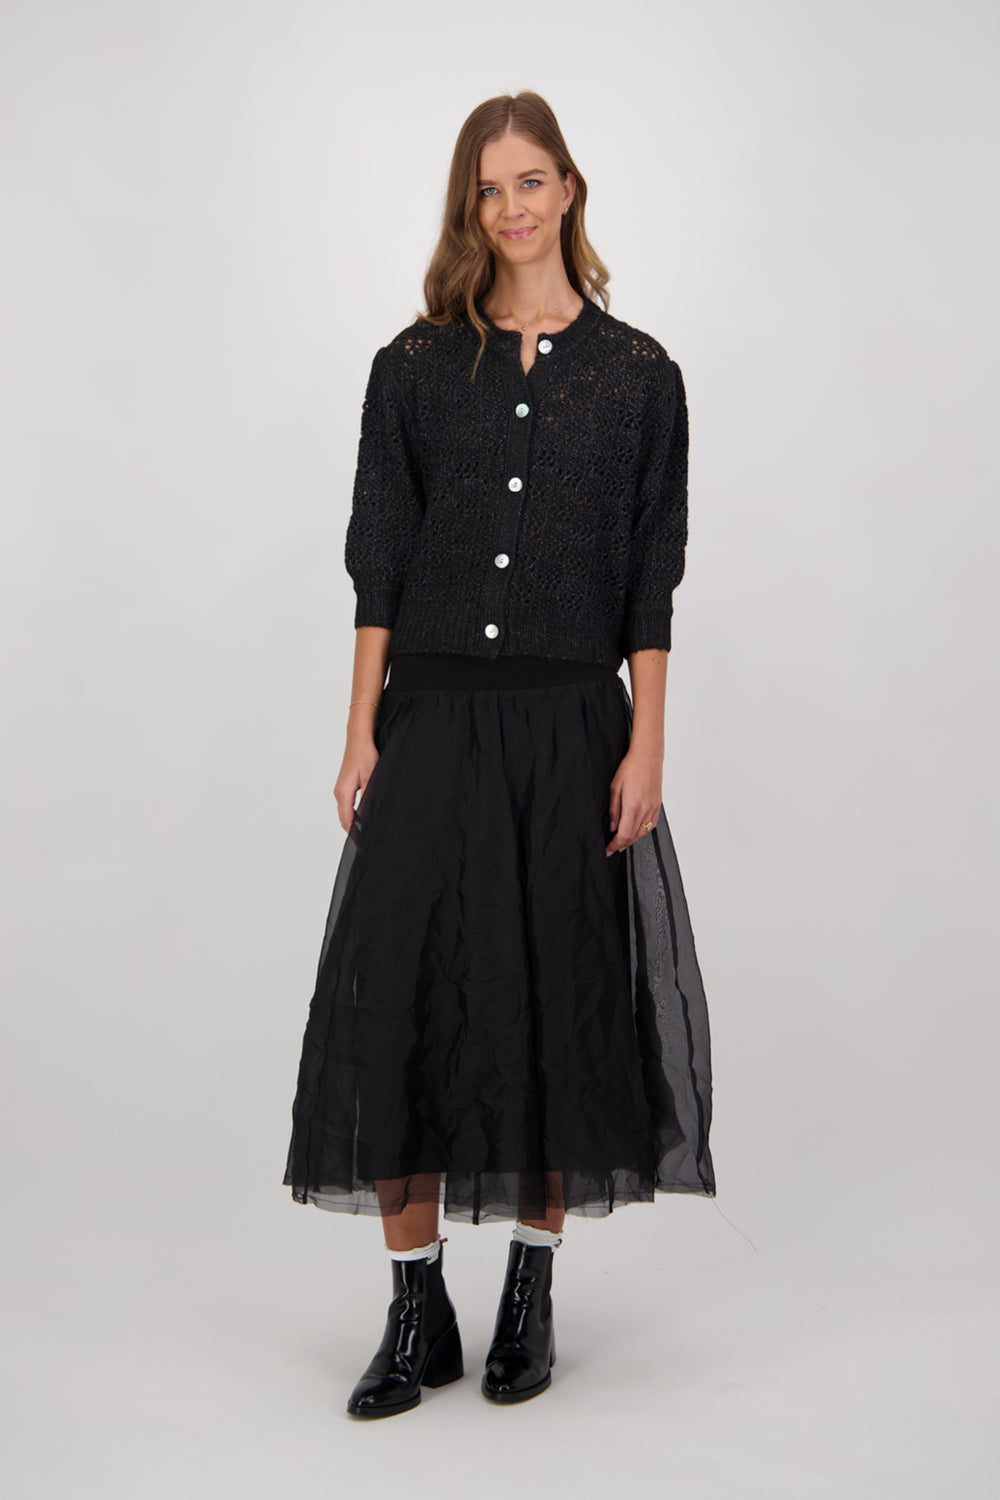 Briarwood Chanel Skirt - Black